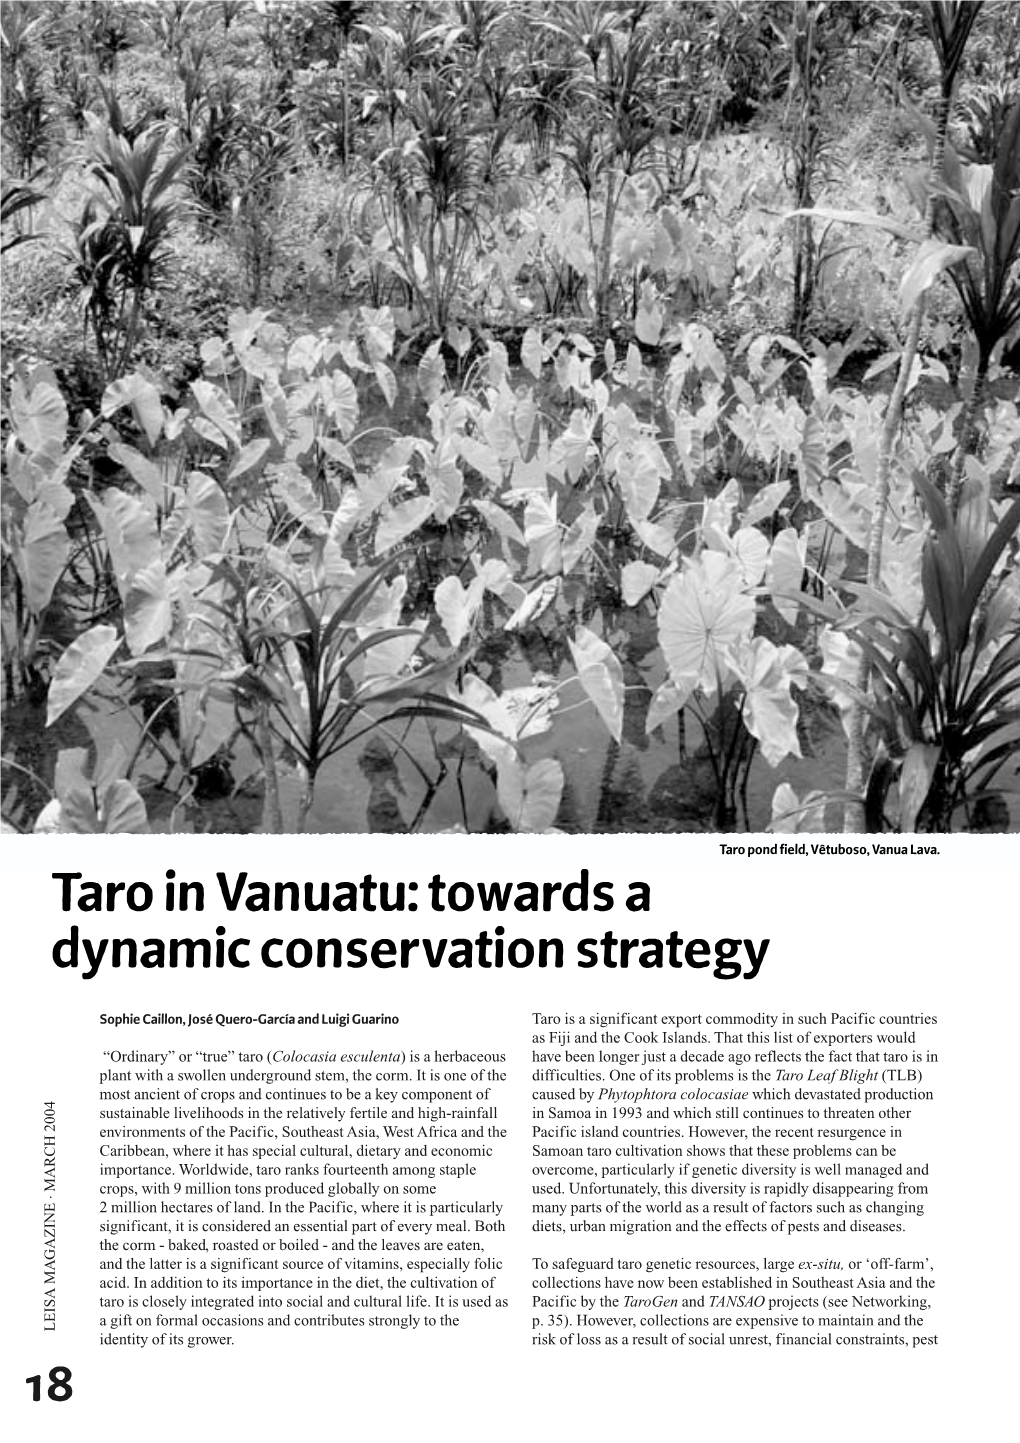 Taro in Vanuatu: Towards a Dynamic Conservation Strategy